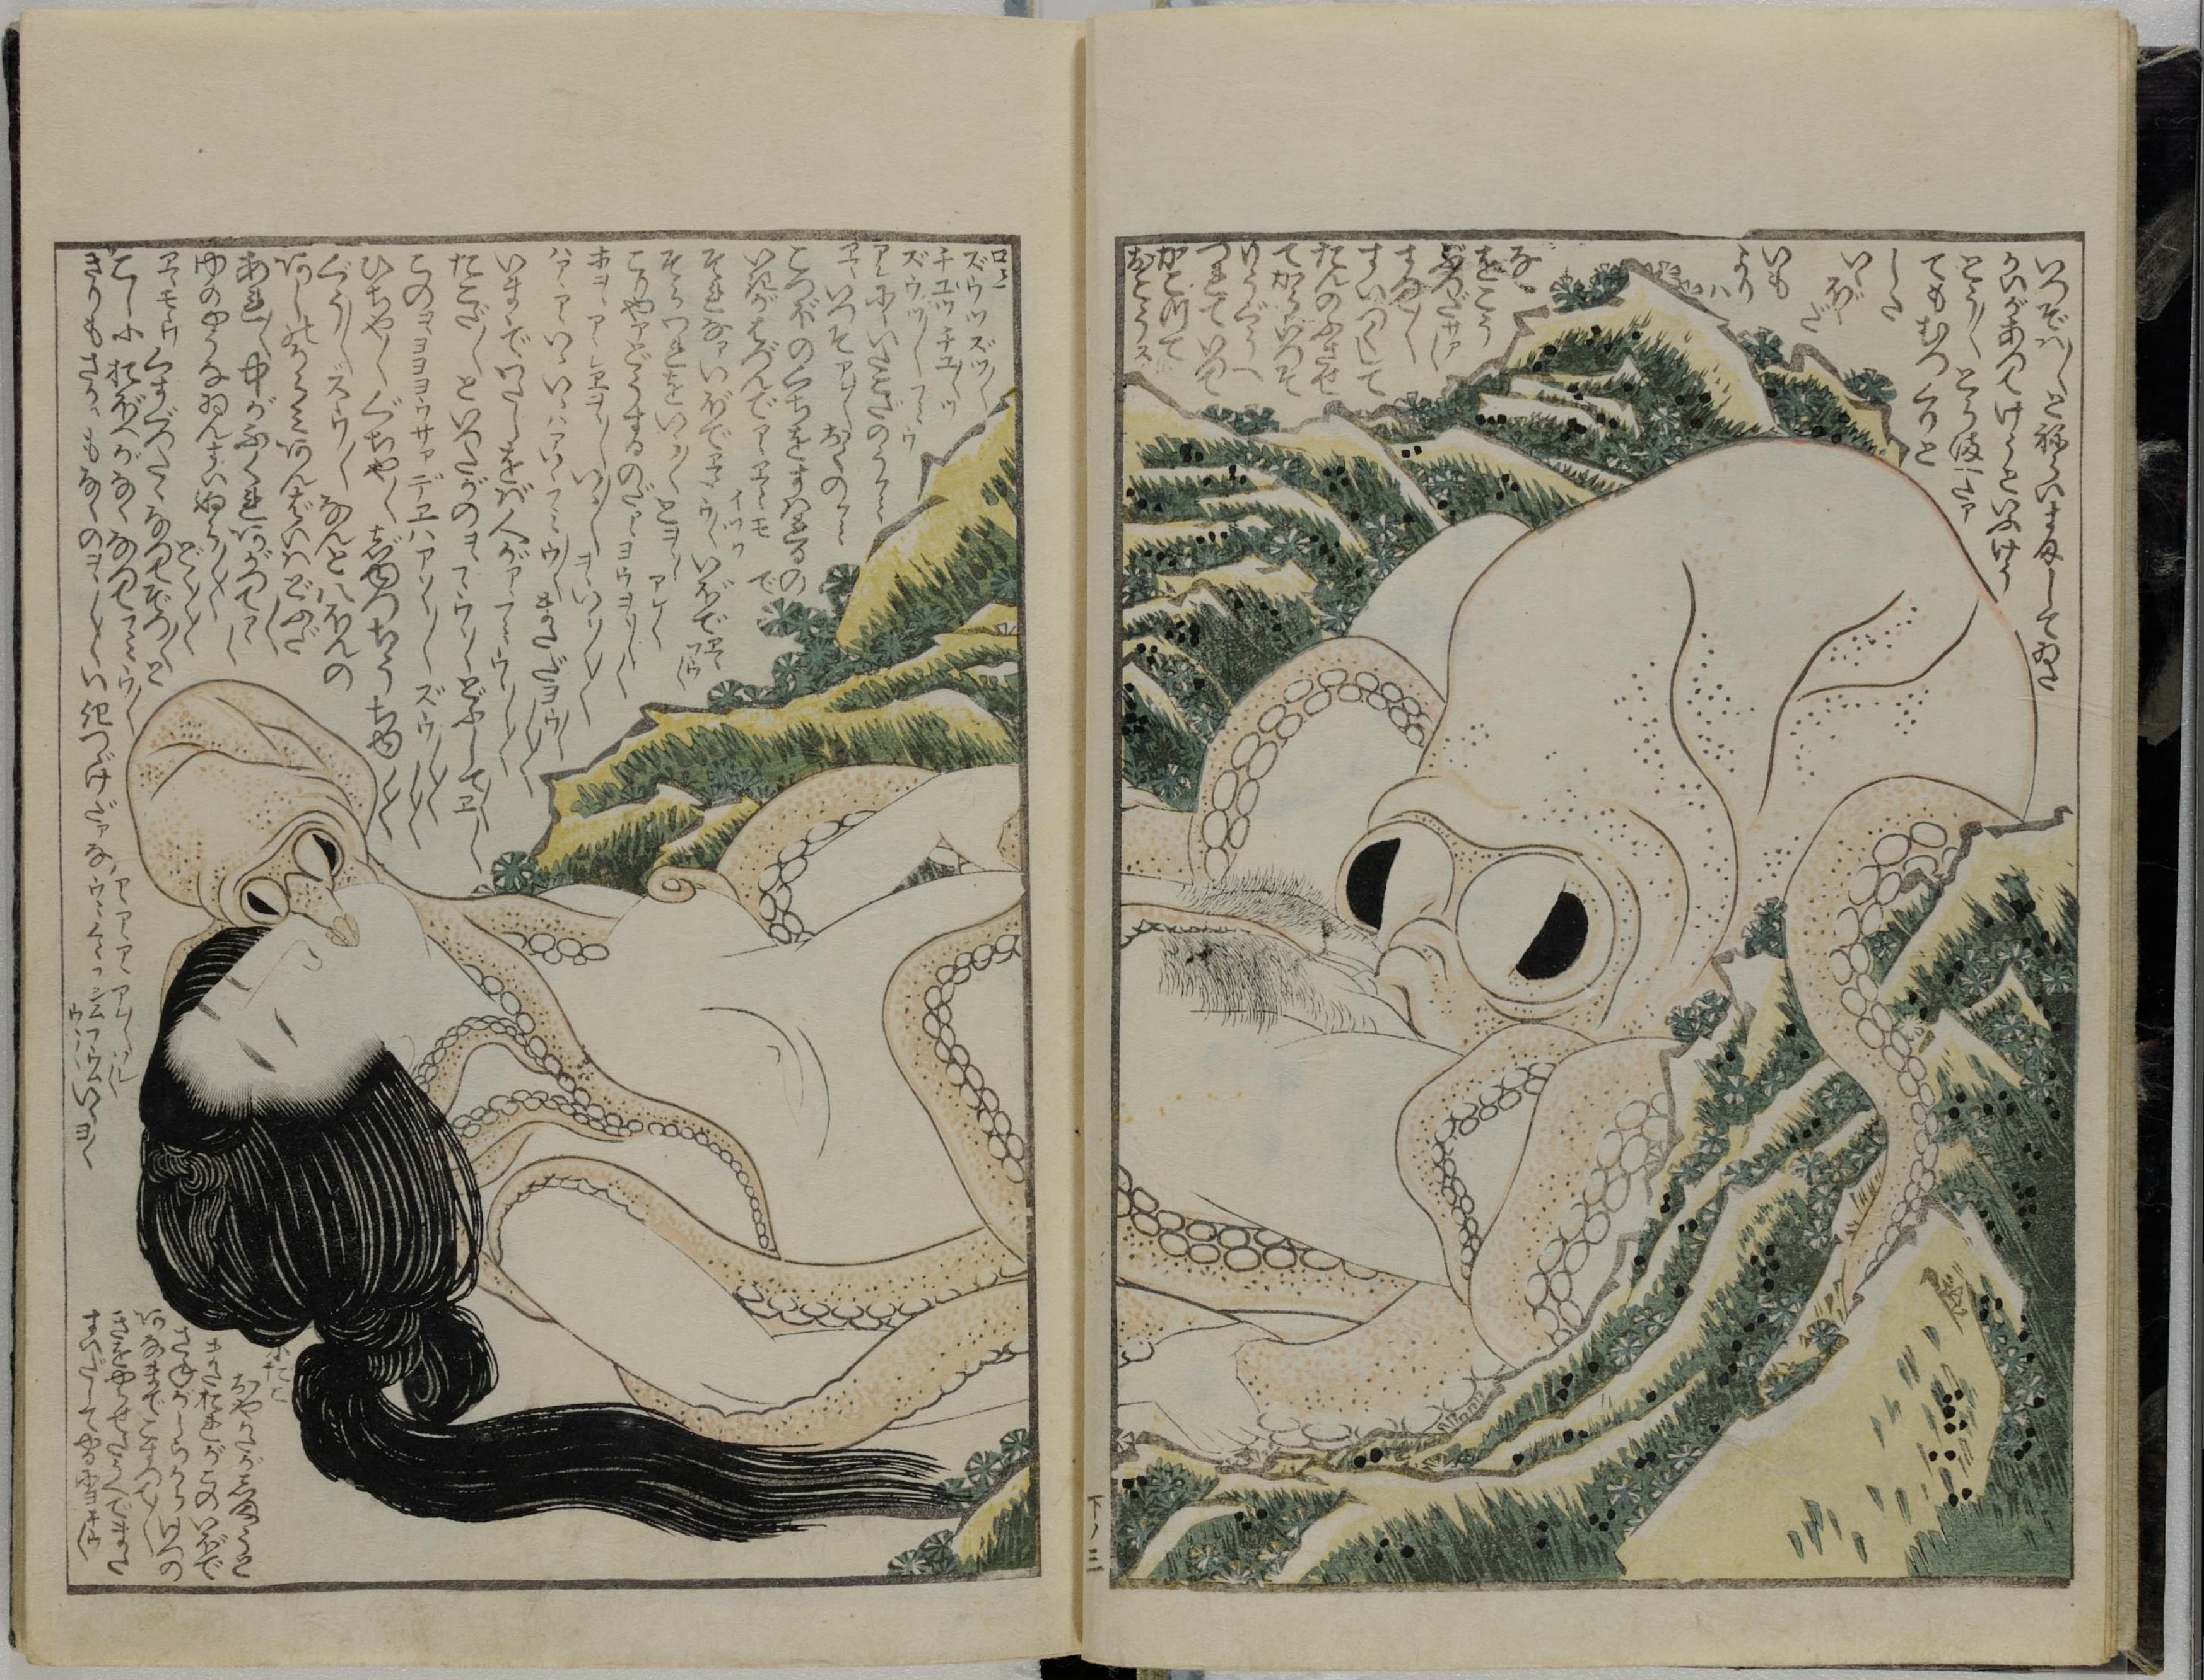 Katsushika Hokusai, The Dream of the Fisherman's Wife, Kinoe no Komatsu (Volume 3), ink and color on paper, ca. 1814. Photo: Public Domain.